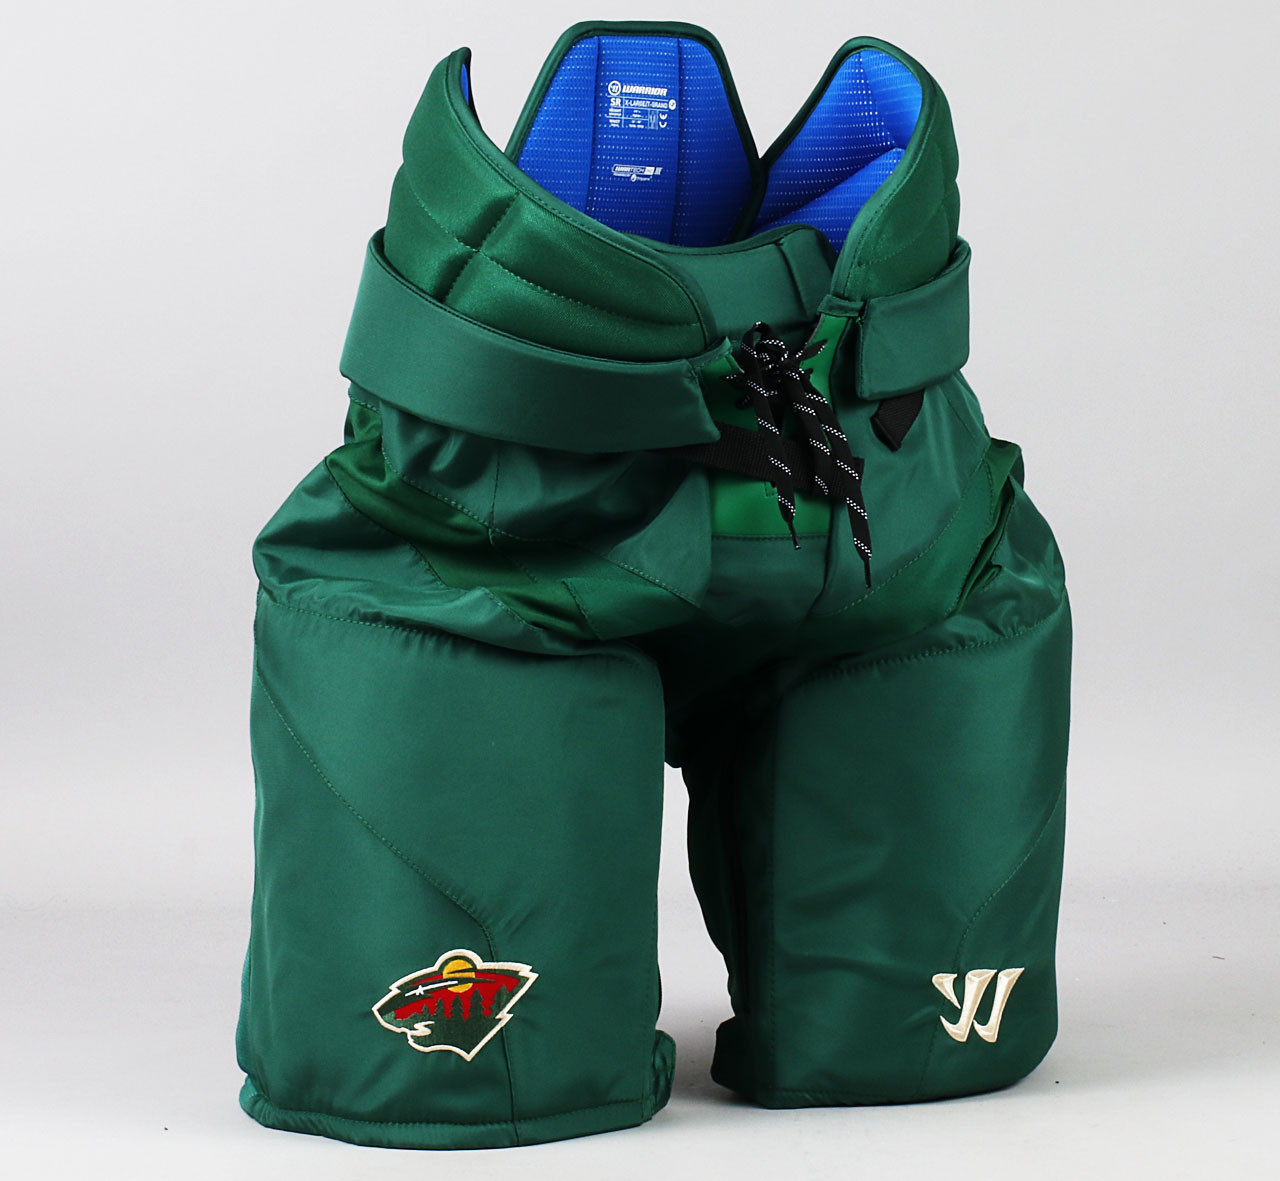 warrior hockey pro stock return hockey pant covers size xl 